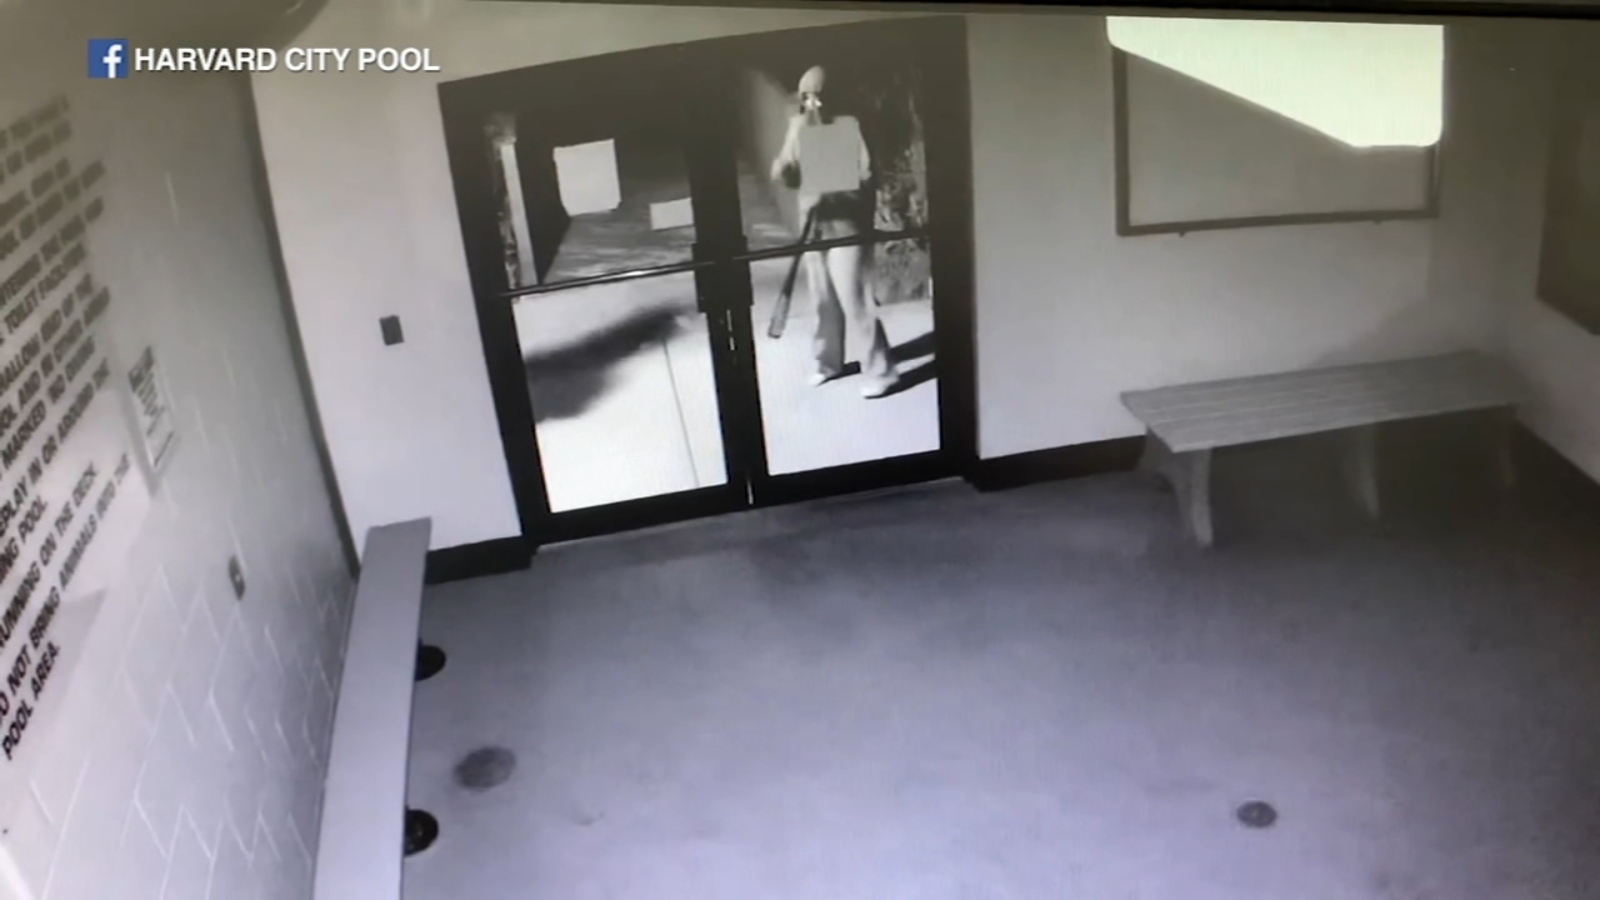  Harvard, IL pool vandalism caught on camera as 2 with bats smash glass doors 